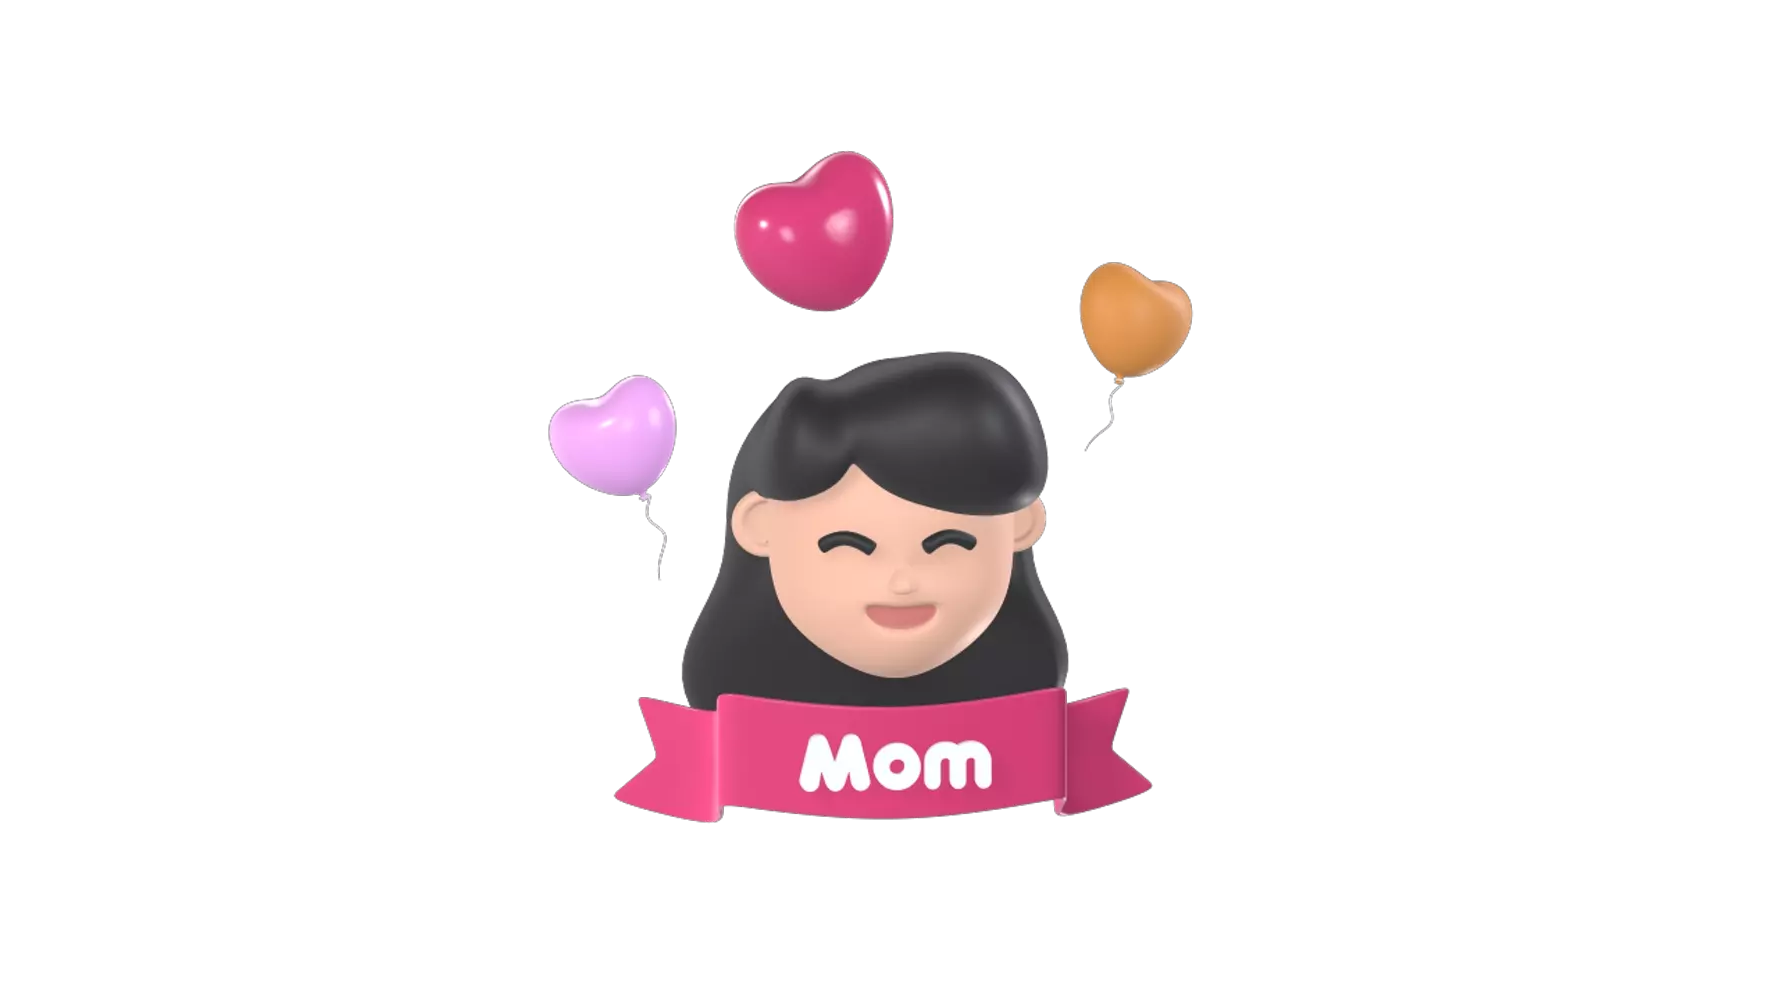 Mom 3D Graphic